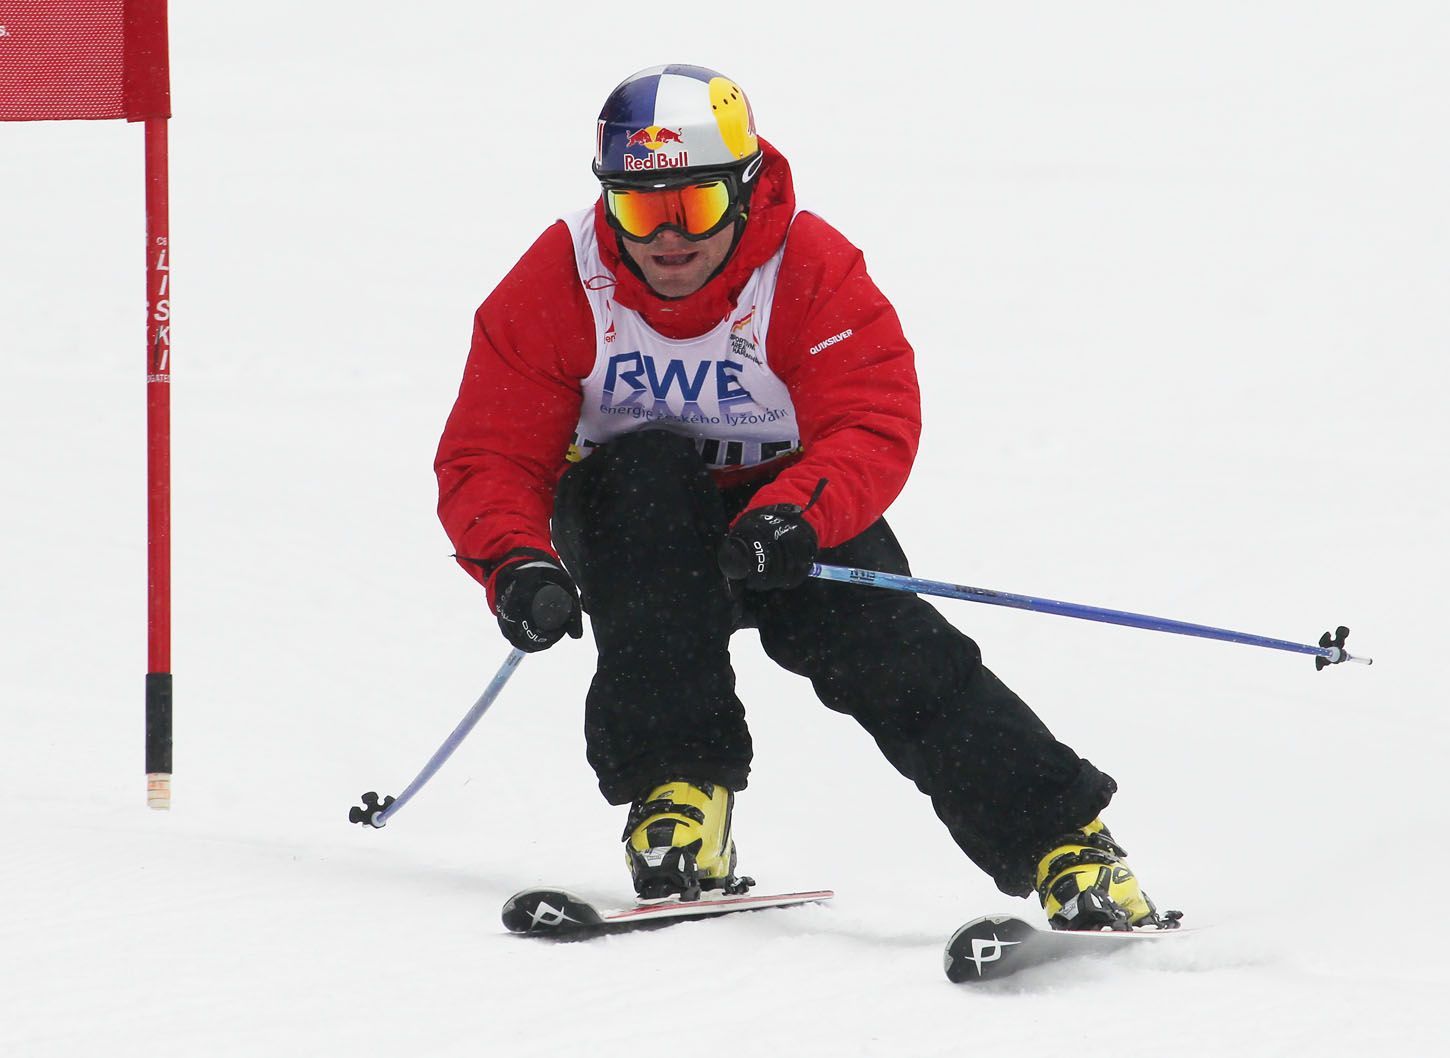 Vavřinec Hradilek na lyžařském sjezdu RWE KSN cup 2013